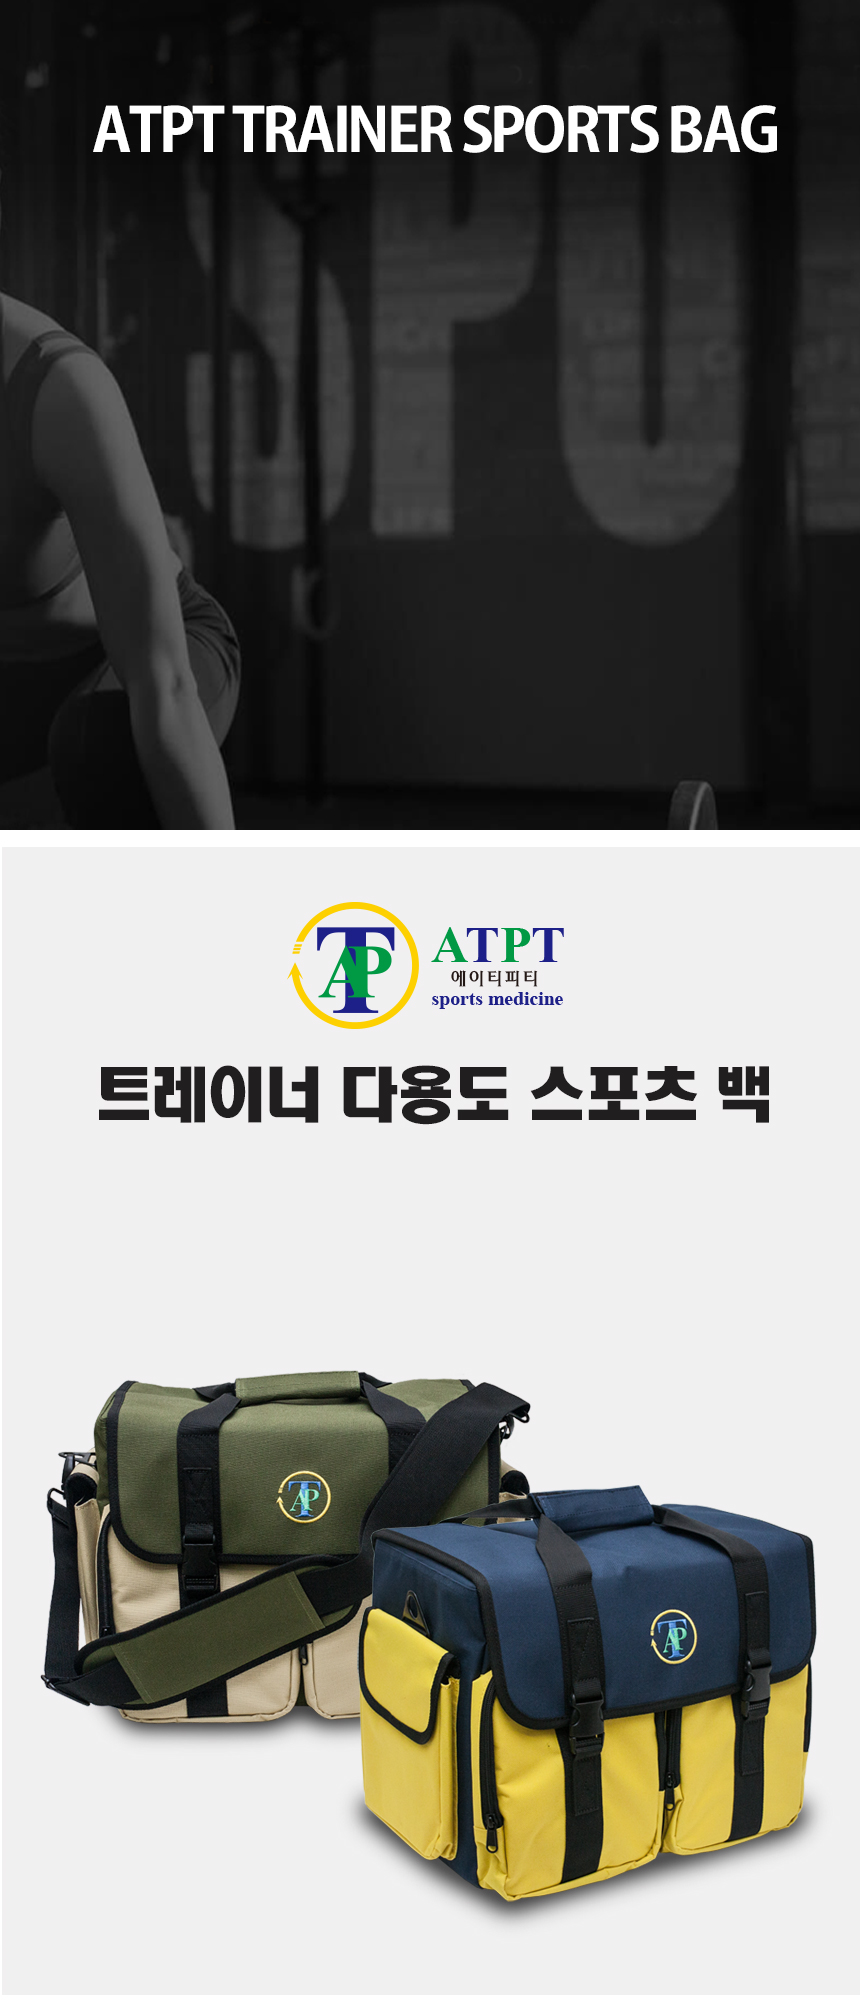 ATPT-trainer-bag_01_100254.jpg